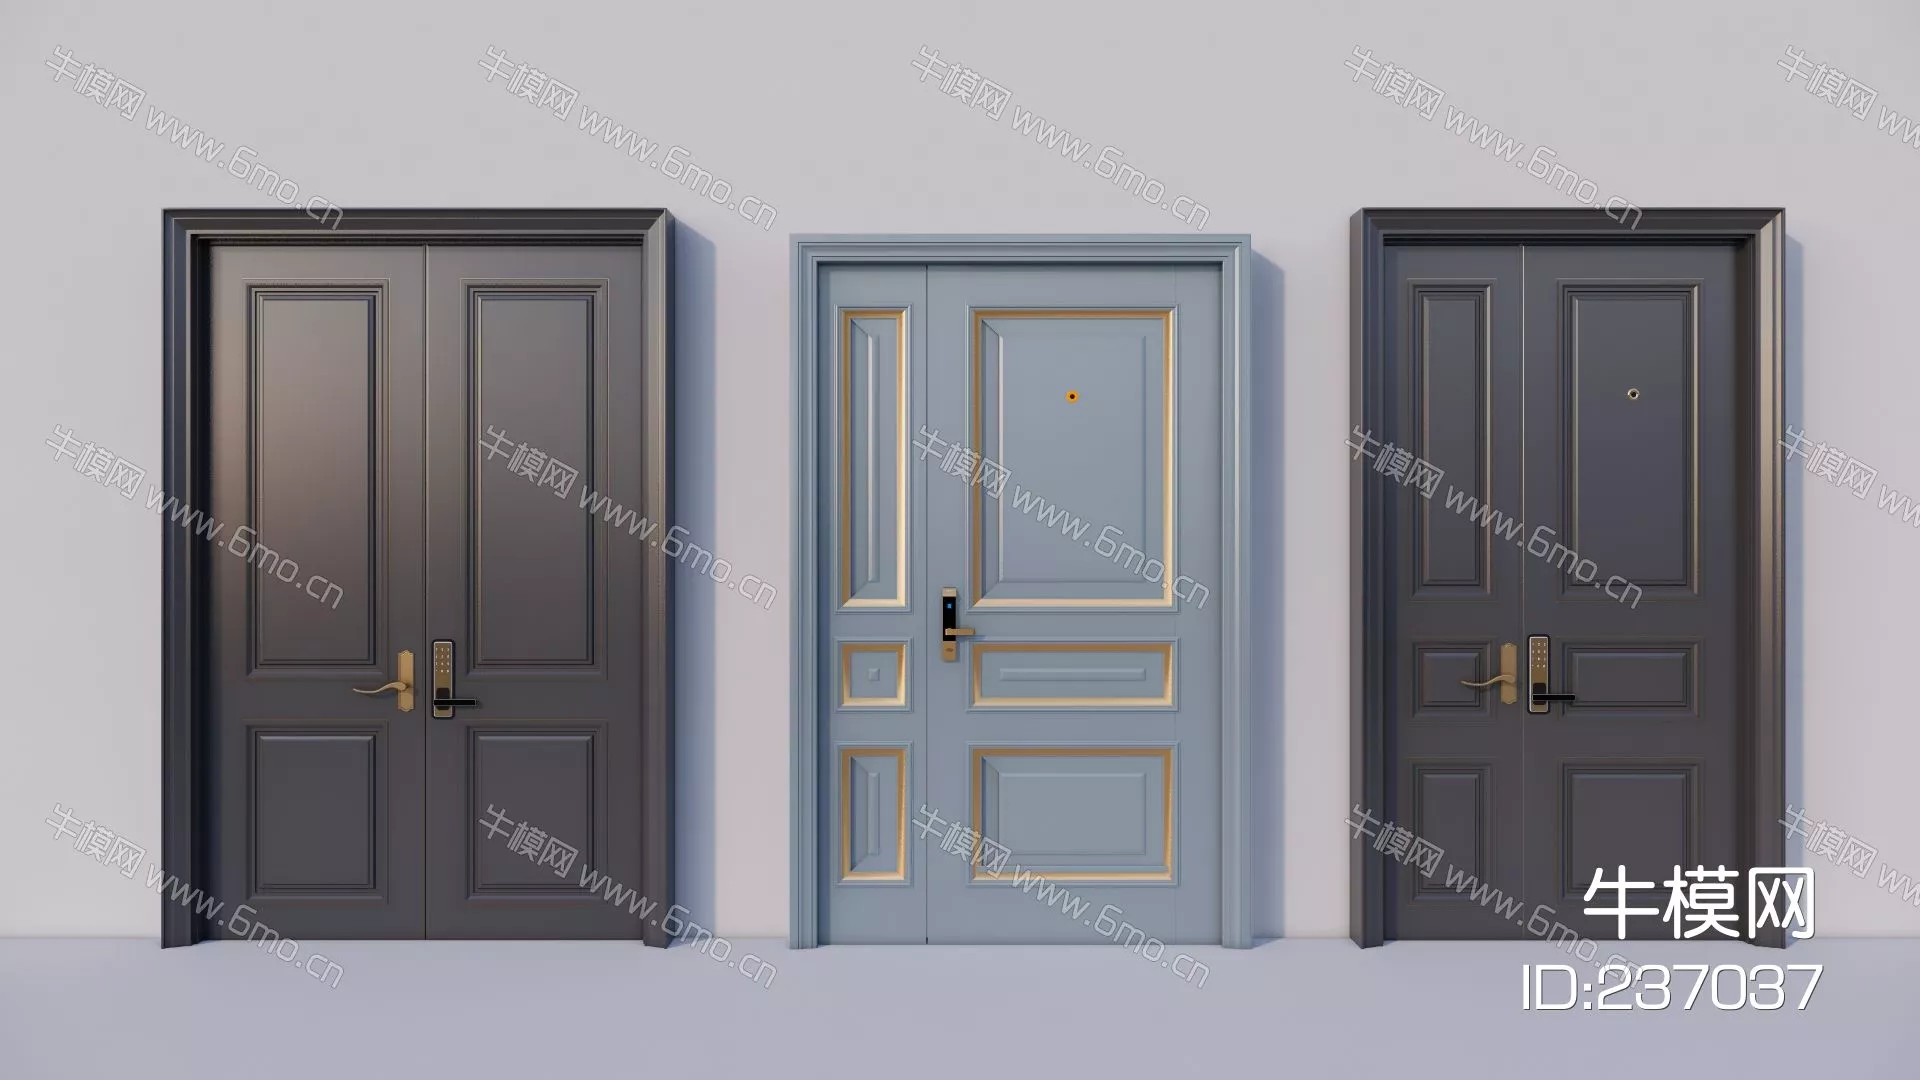 MODERN DOOR AND WINDOWS - SKETCHUP 3D MODEL - ENSCAPE - 237037